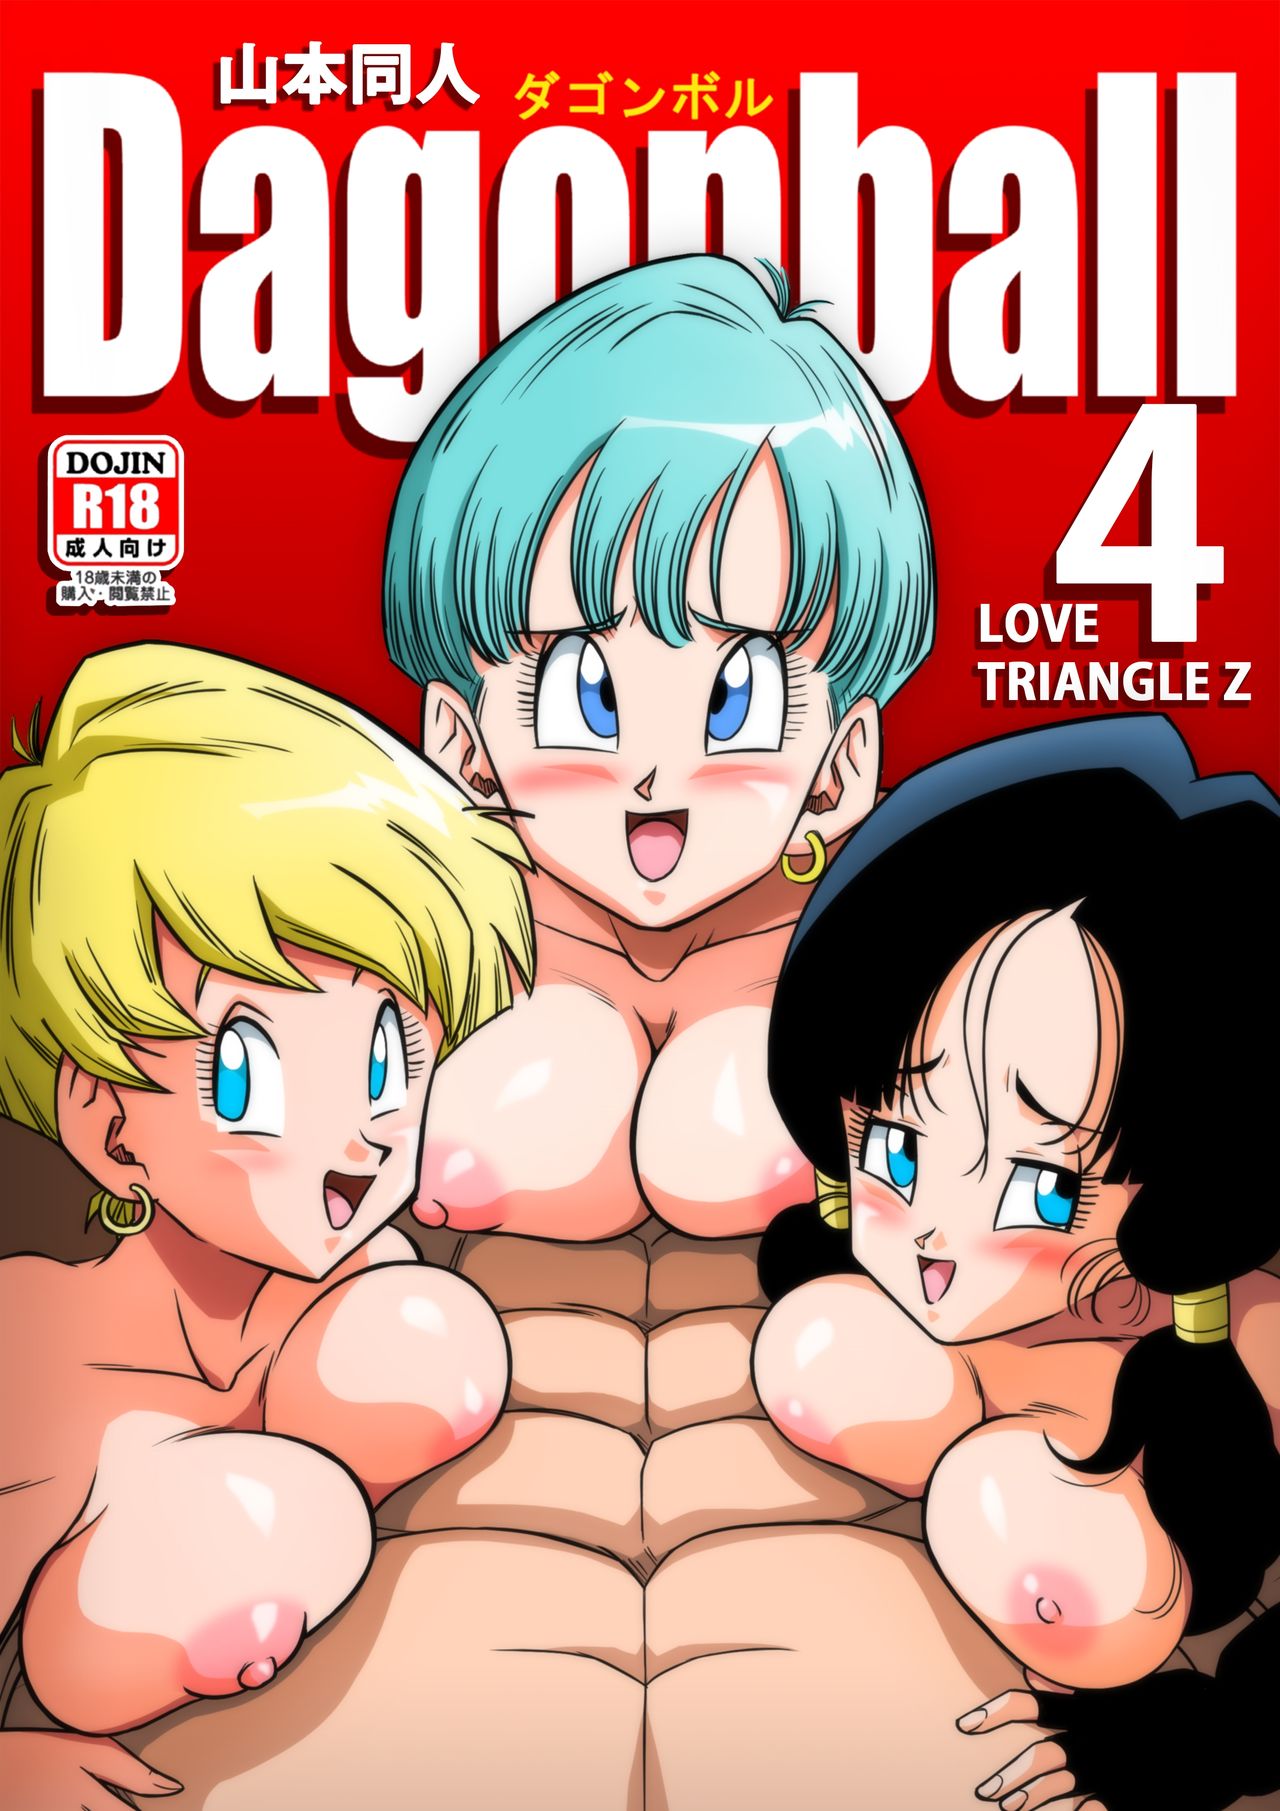 Yamamoto] LOVE TRIANGLE Z 4 • Free Porn Comics